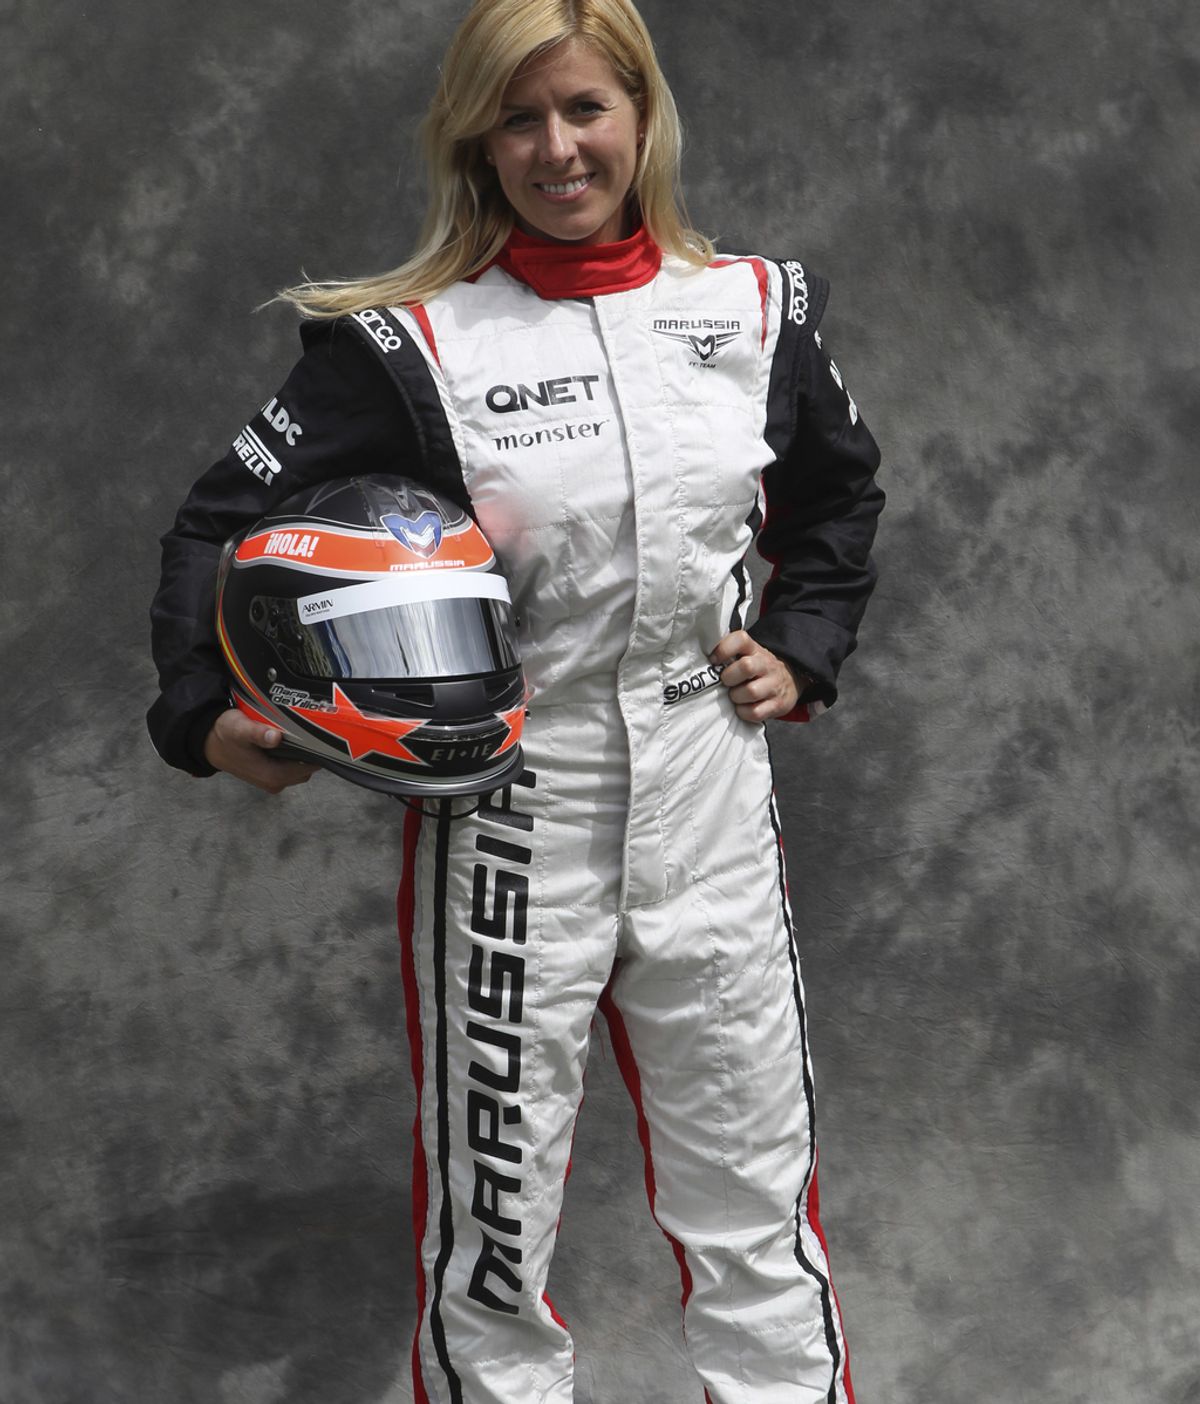 María de Villota, ex piloto de Fórmula 1